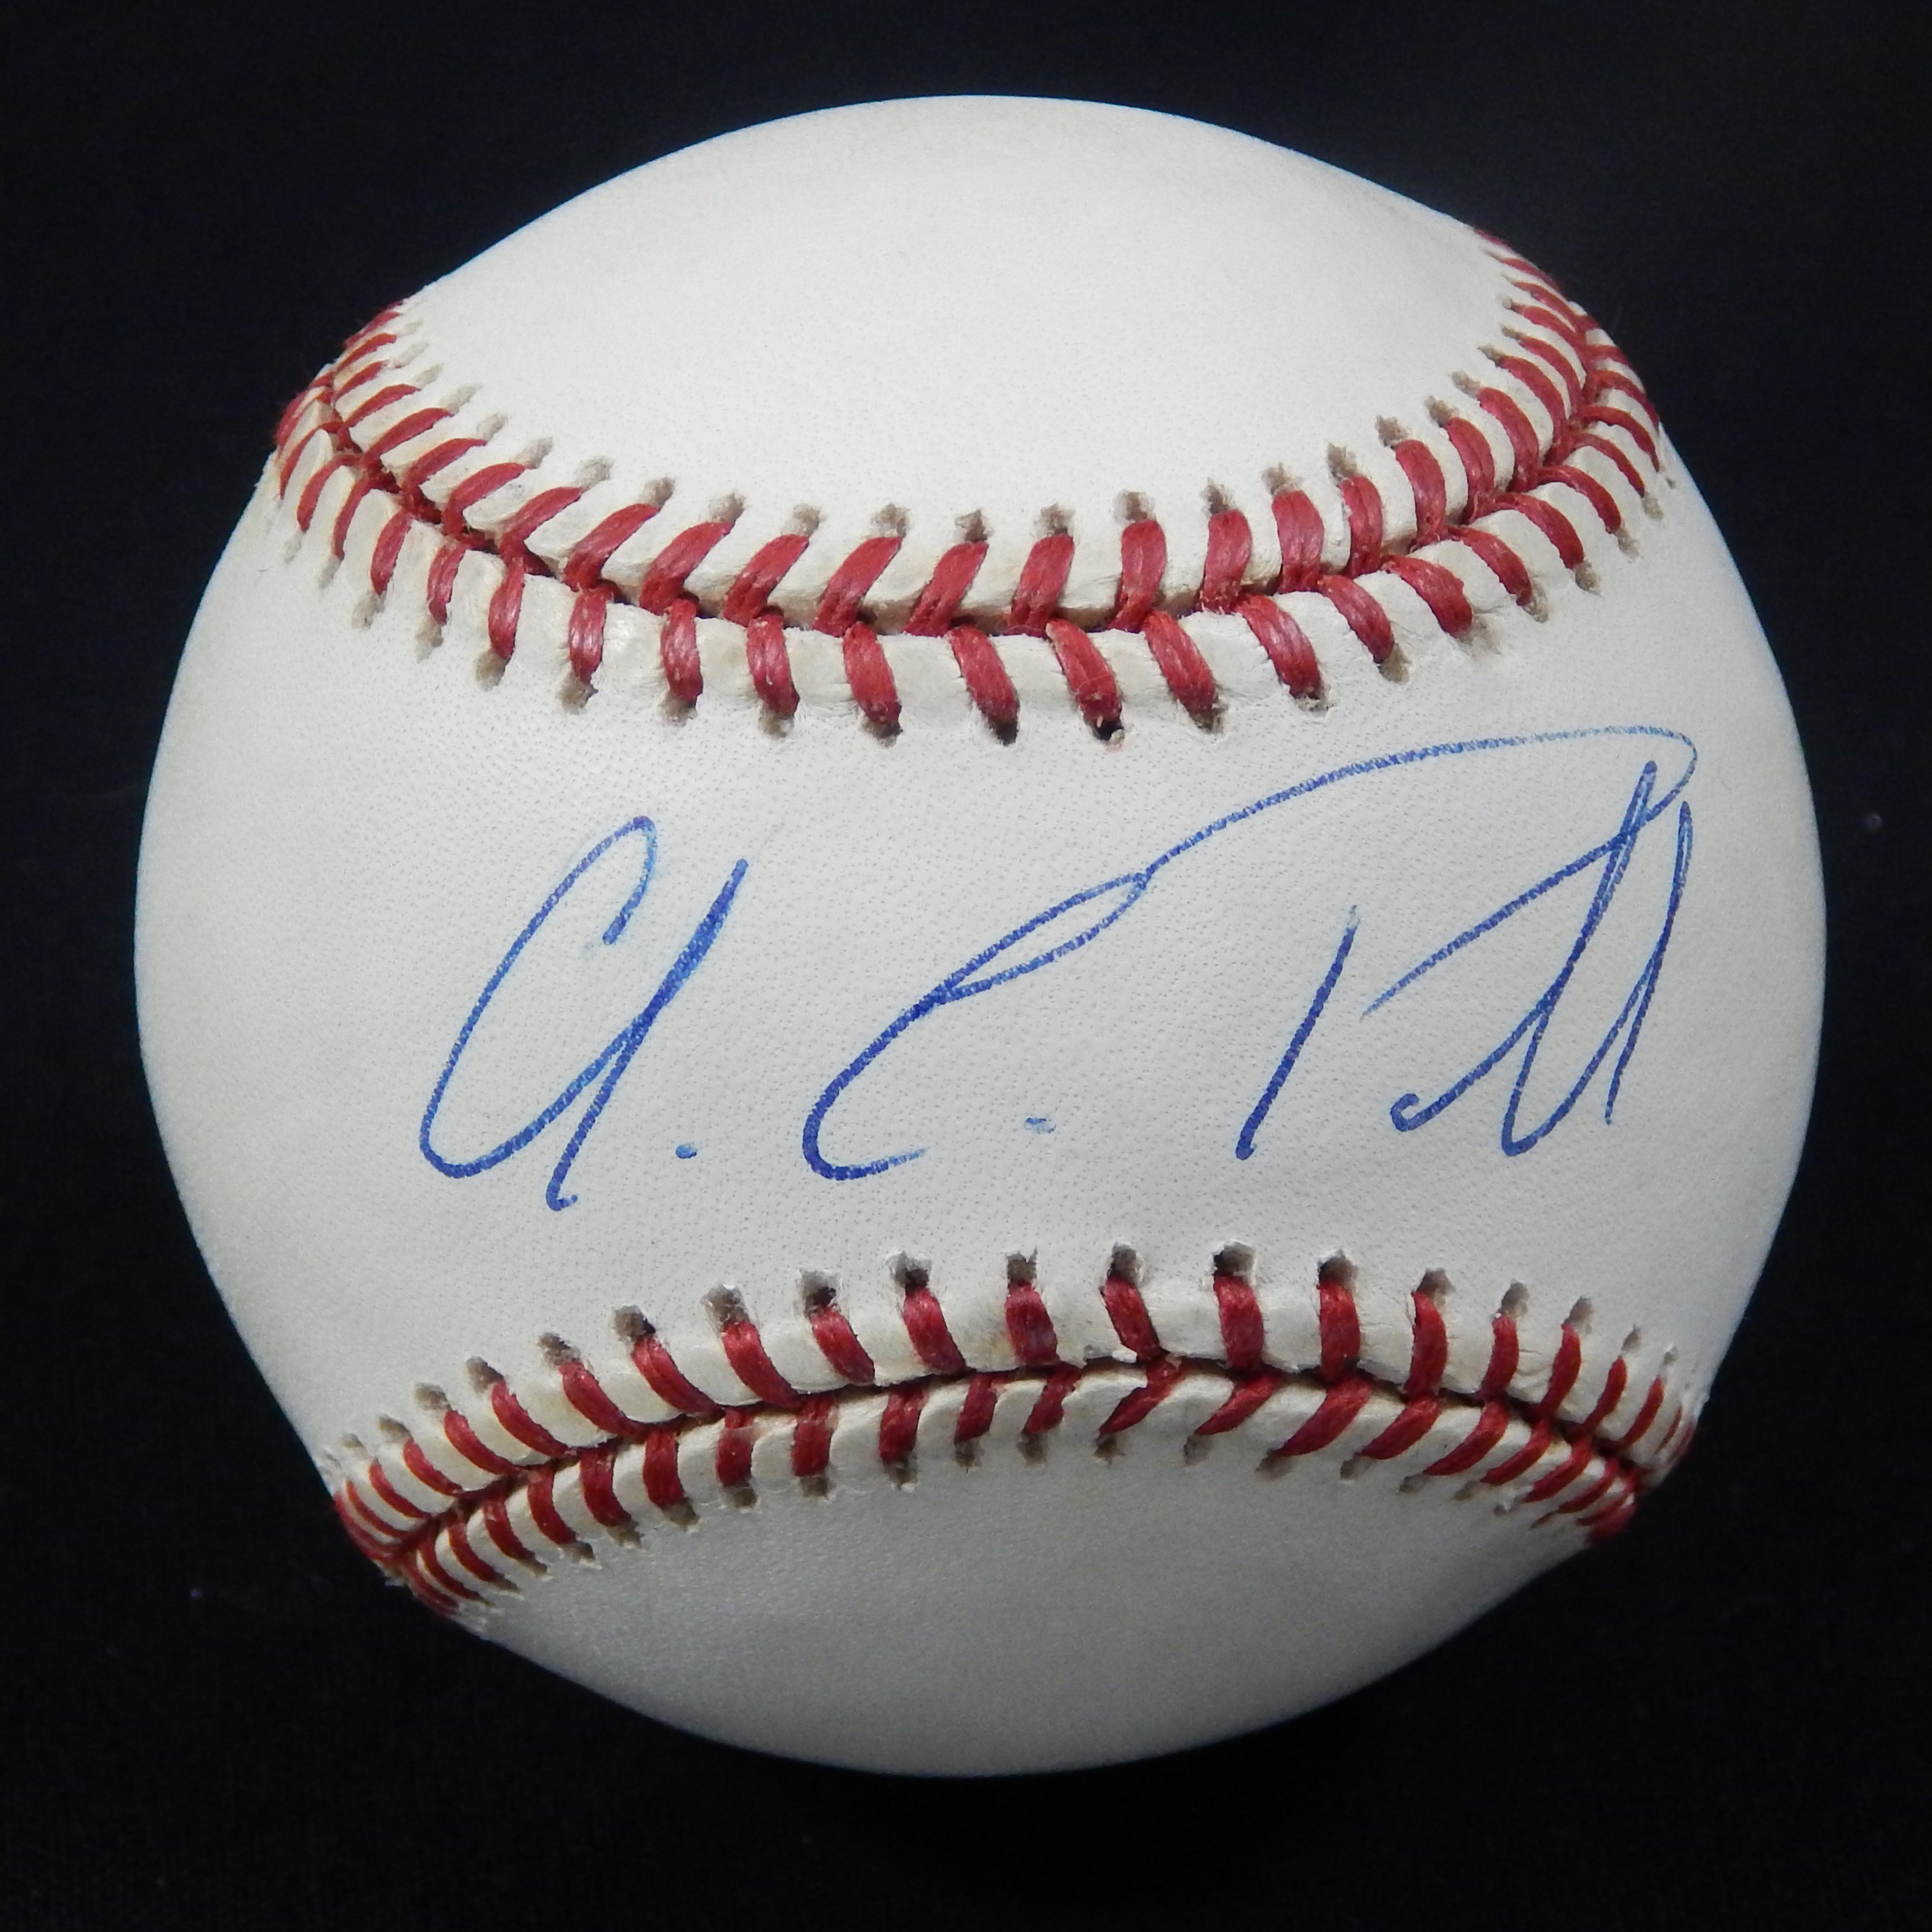 Single Signed Baseballs - Colin Powell Single Signed Baseball